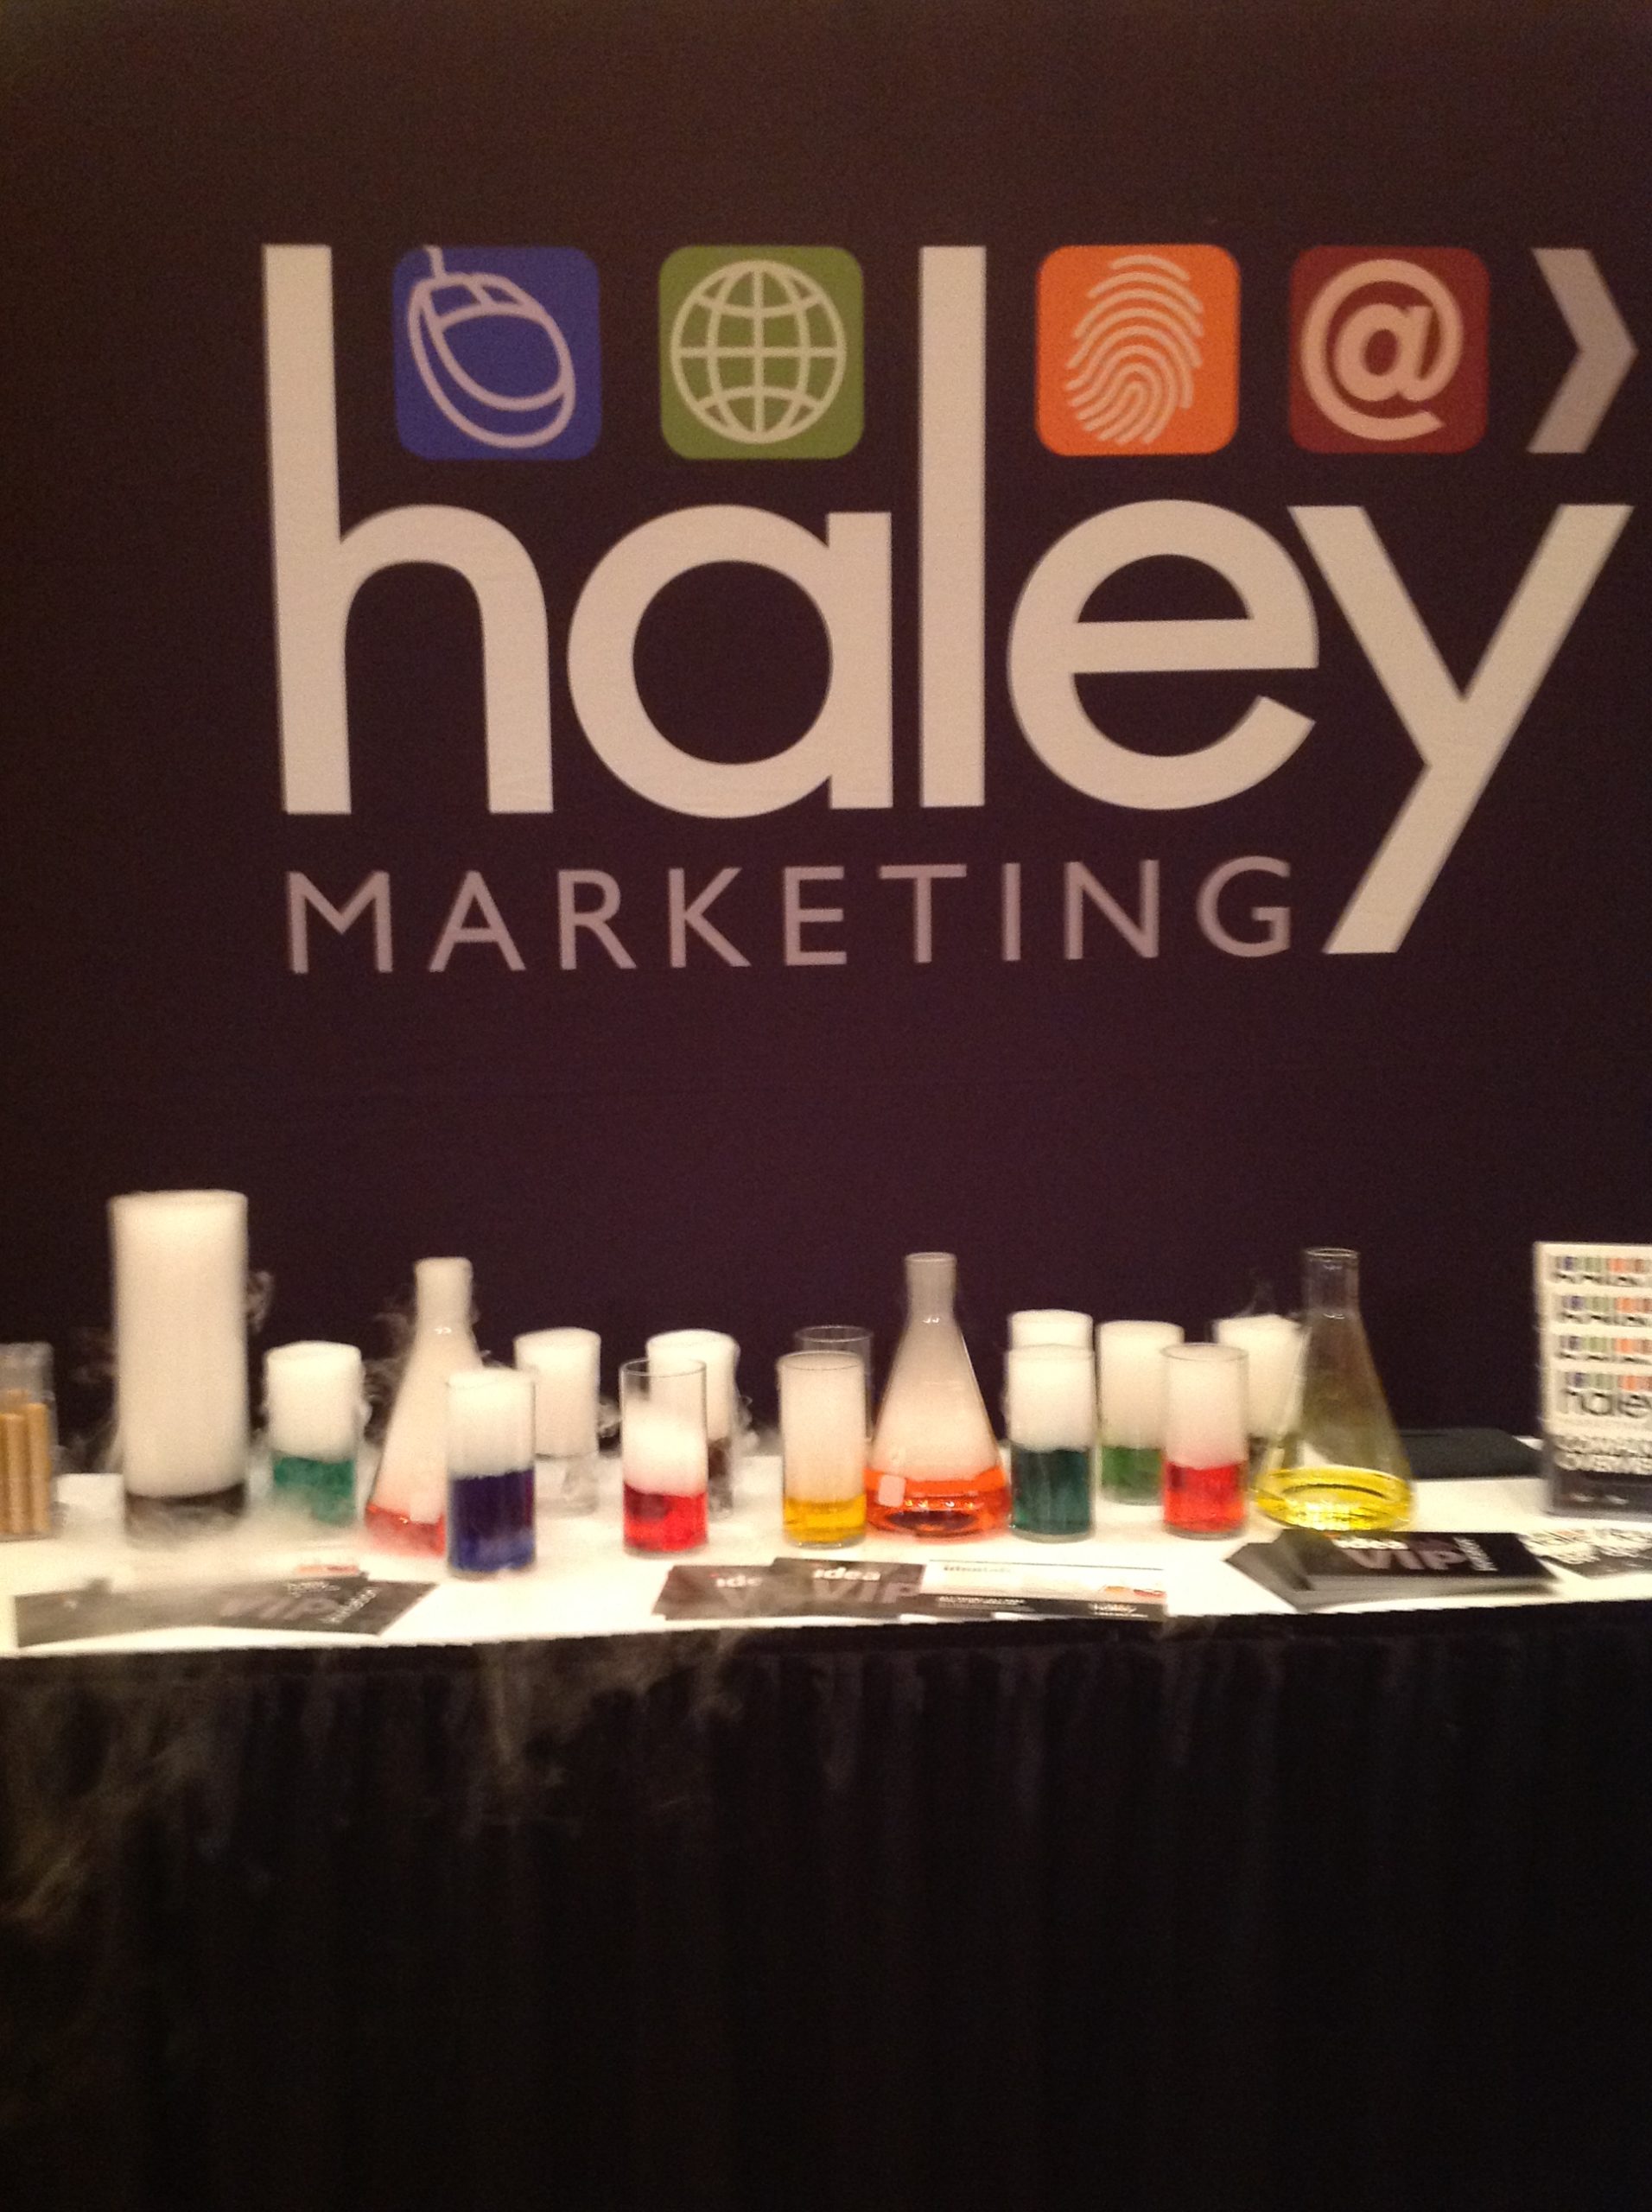 Haley Marketing's Idea Lab booth at Staffing World 2012